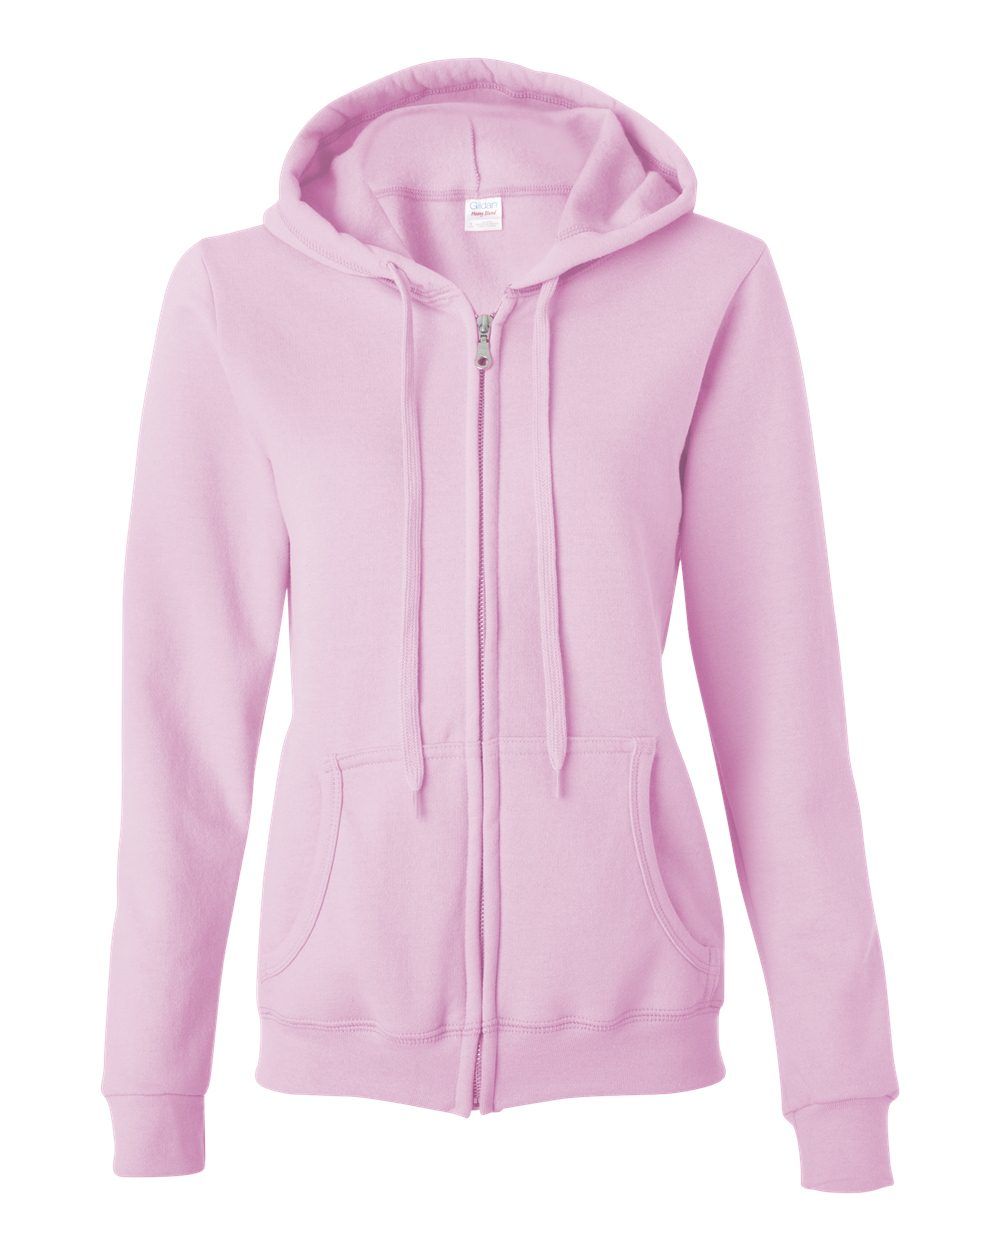 Gildan Heavy Blend Missy Fit Full-Zip Hooded Sweatshirt Women's Hoodie 18600FL